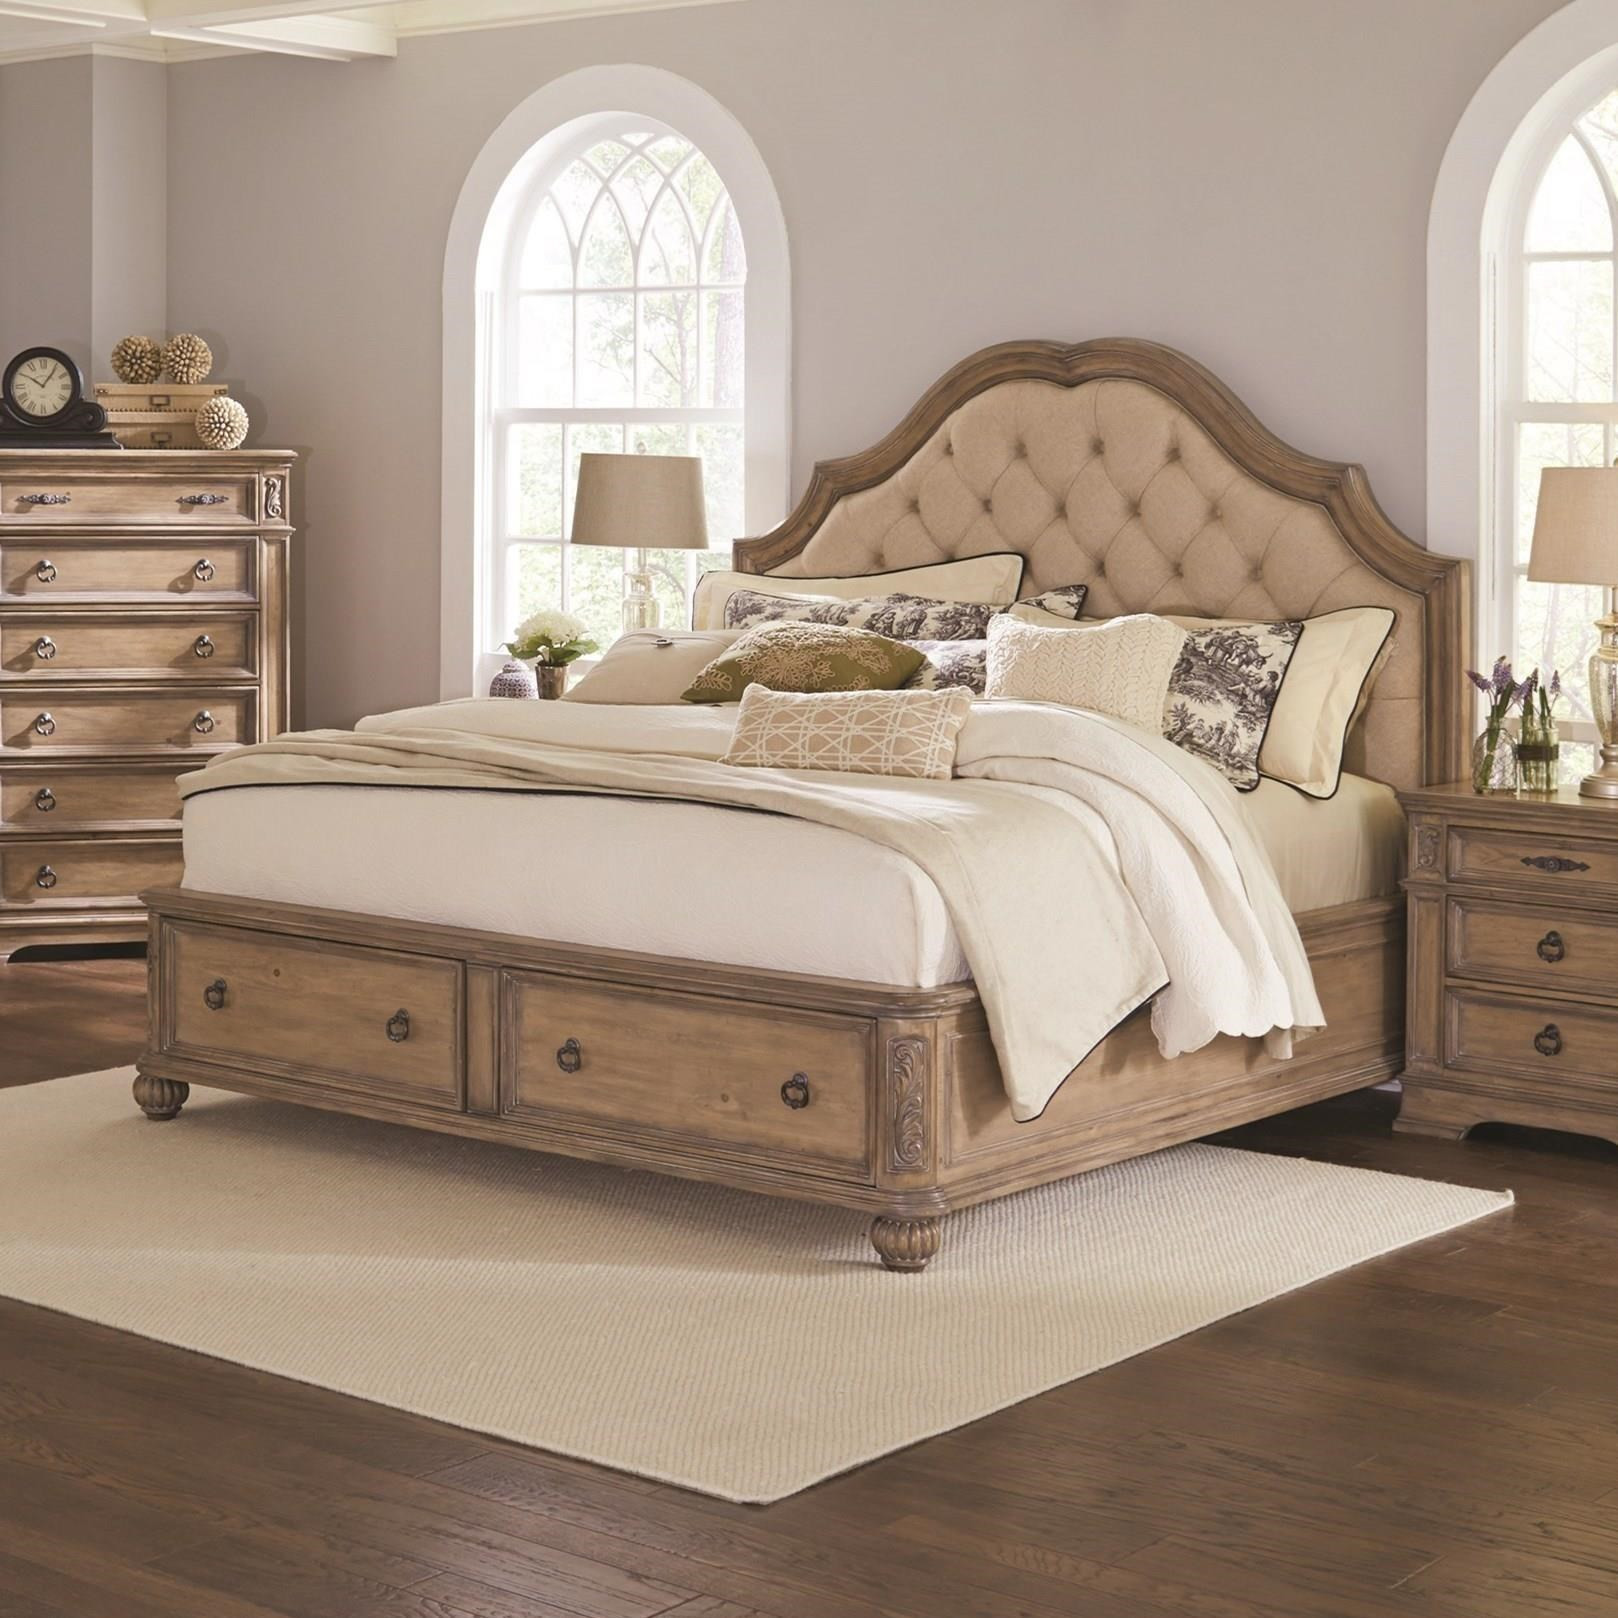 Storage Bedroom Furniture
 Coaster Ilana Queen Storage Bed with Upholstered Headboard